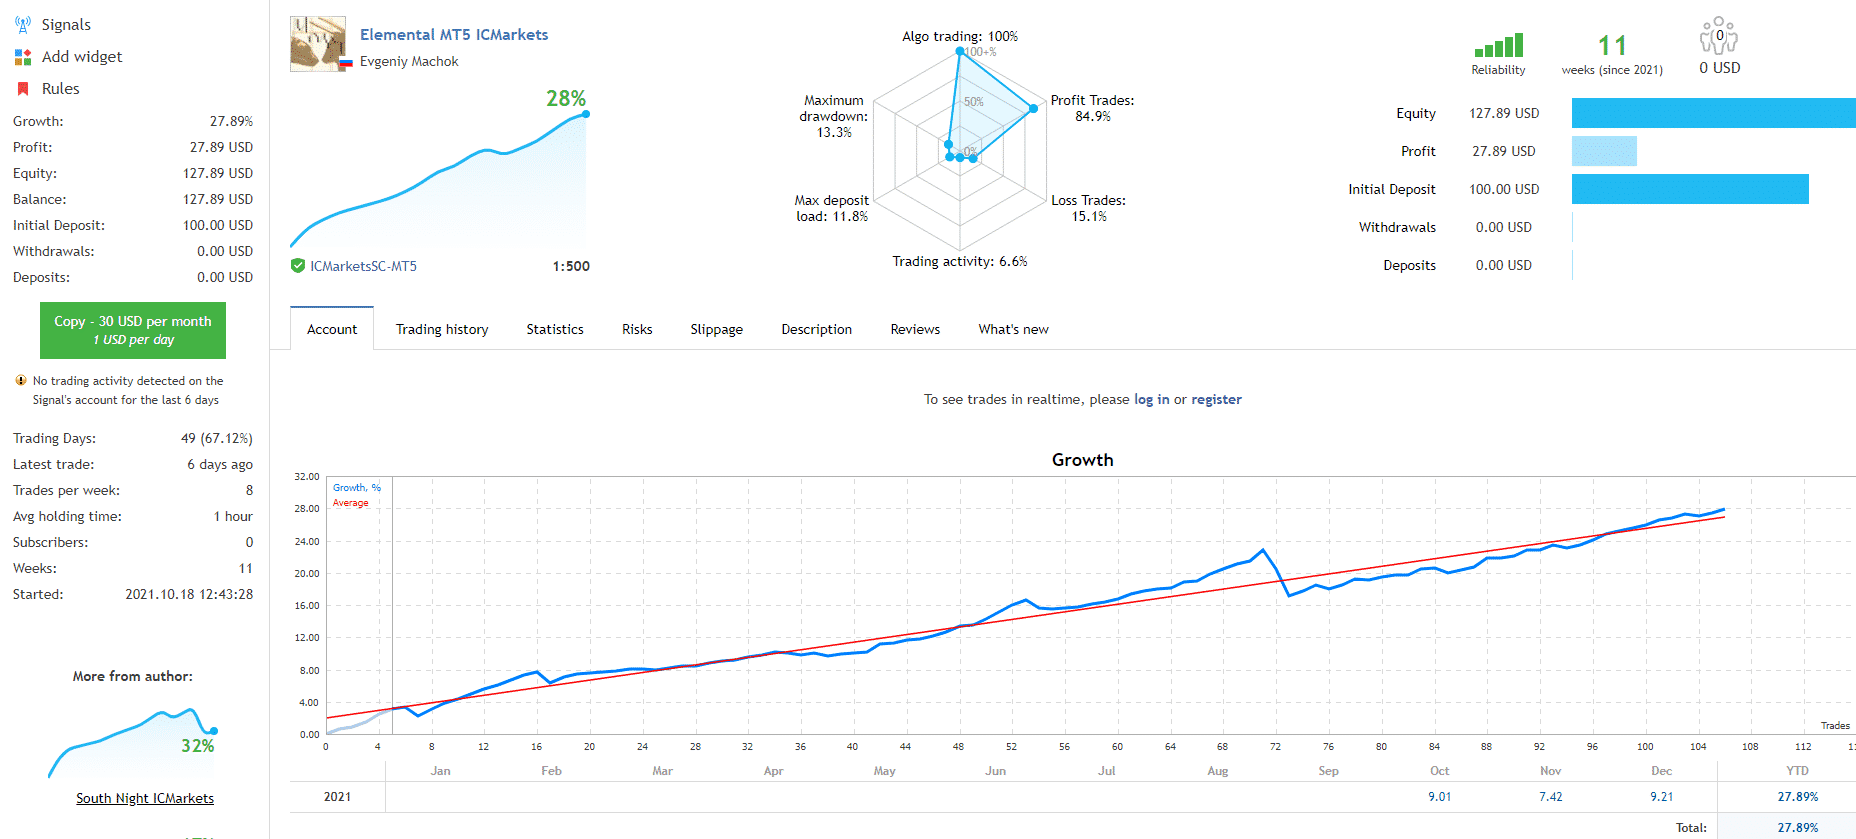 Growth chart of Elemental EA.